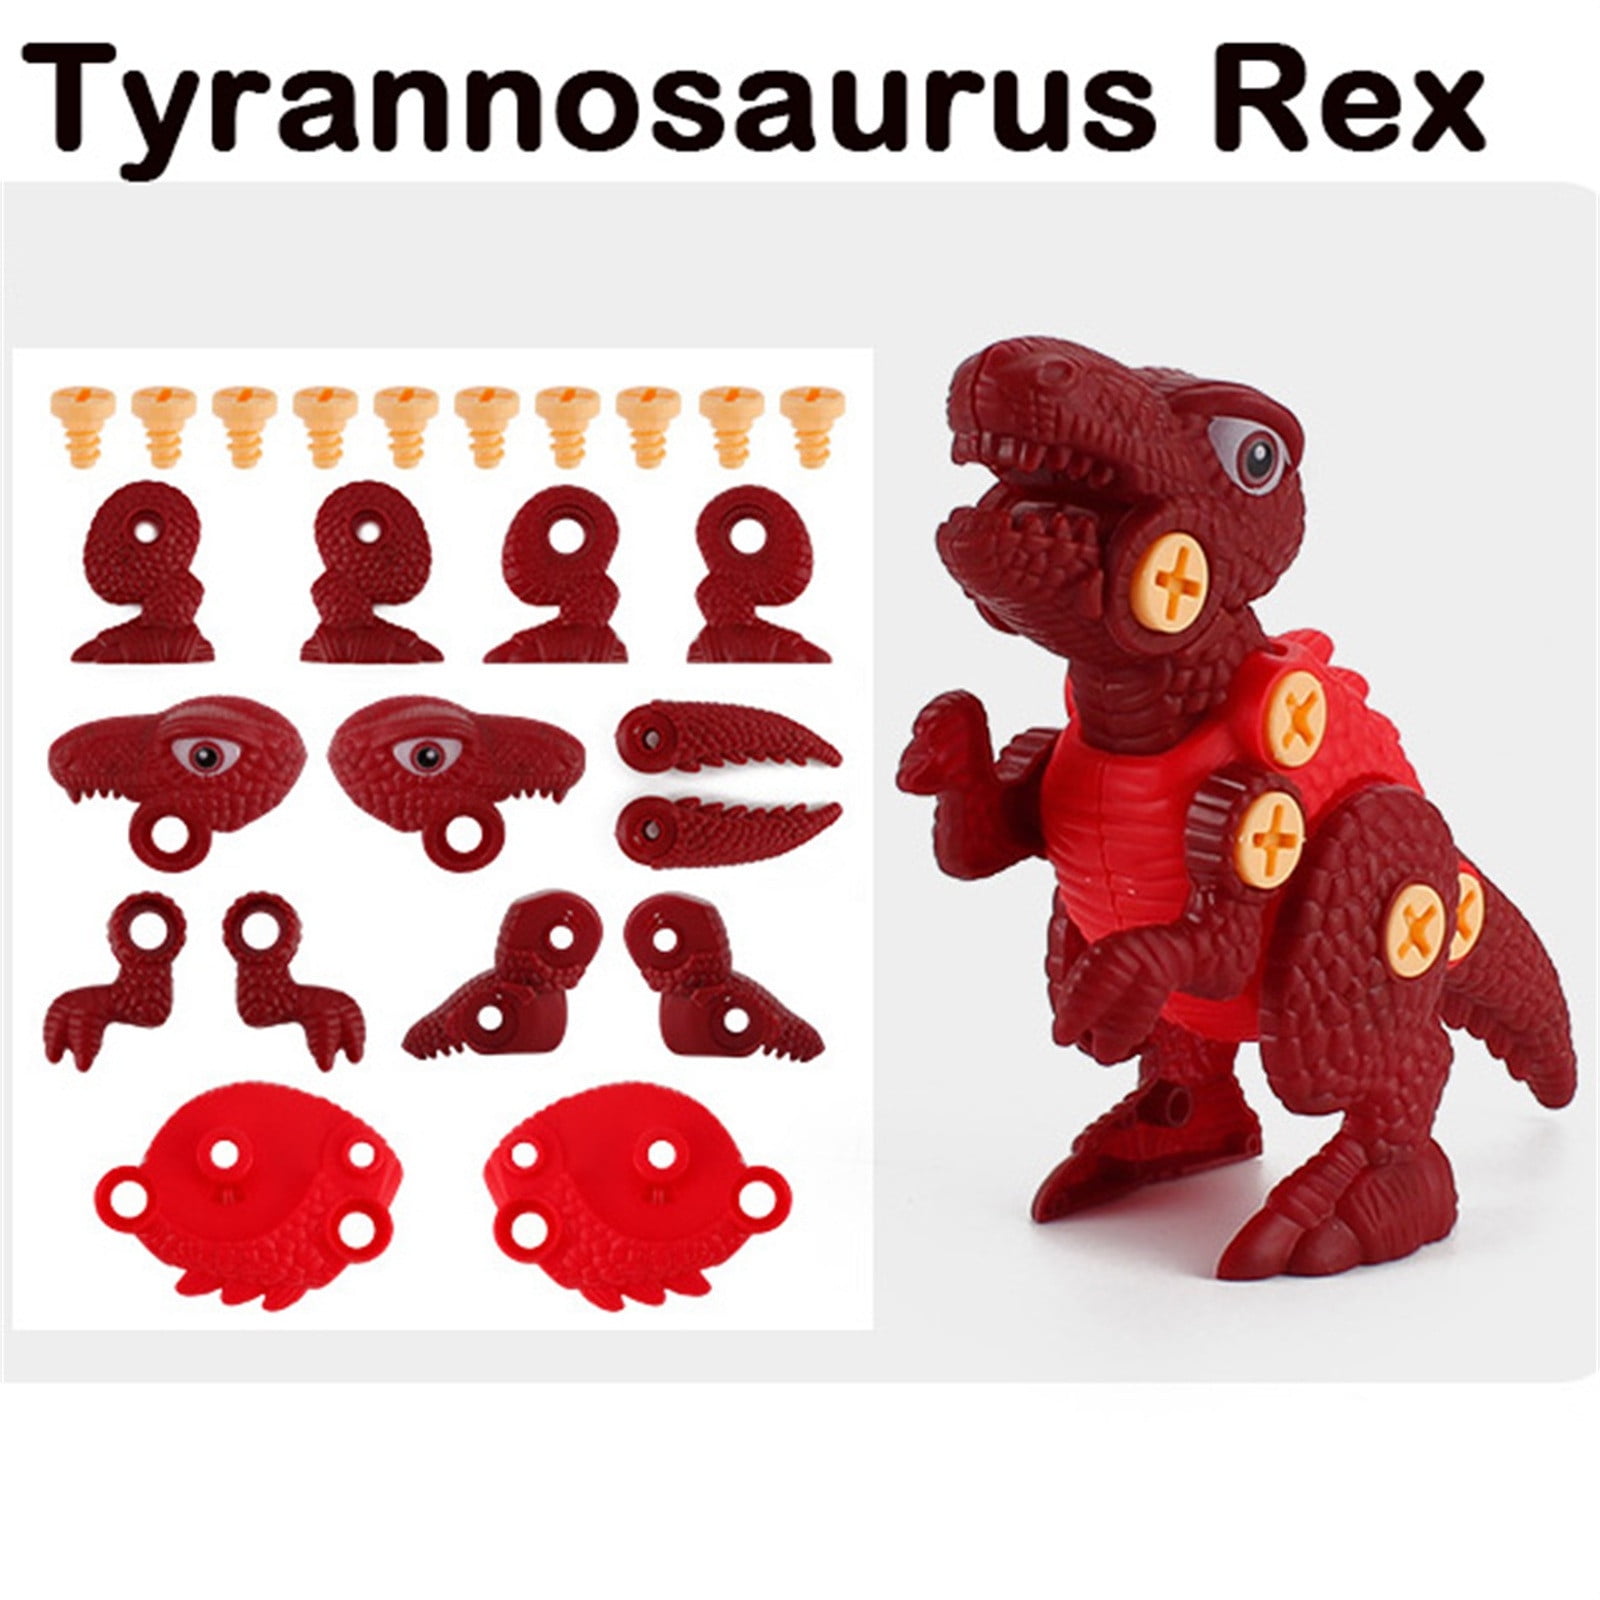 Fridja Dinosaur Toys, Take Apart Toys with Dinosaur Eggs,STEM Building Learning Toy Set for Kids 3 4 5 6 7 Years Old Girls Boys Easter Christmas